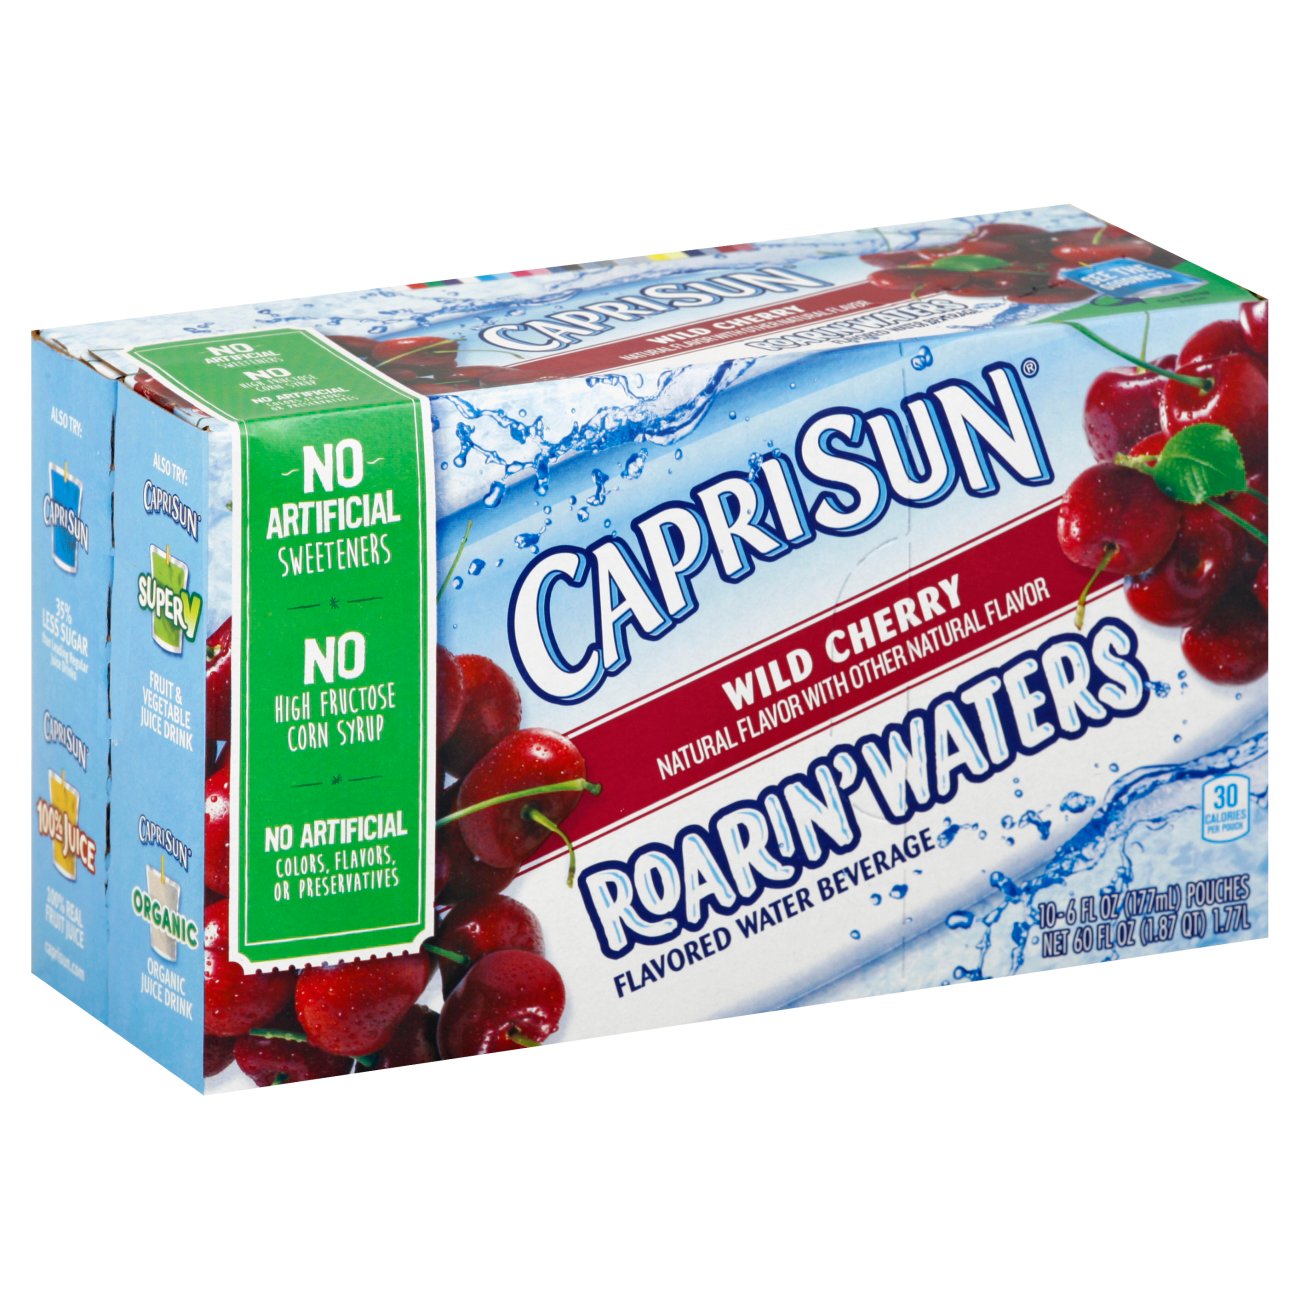 Capri Sun Roarin' Waters Wild Cherry Flavored Water Beverage 6